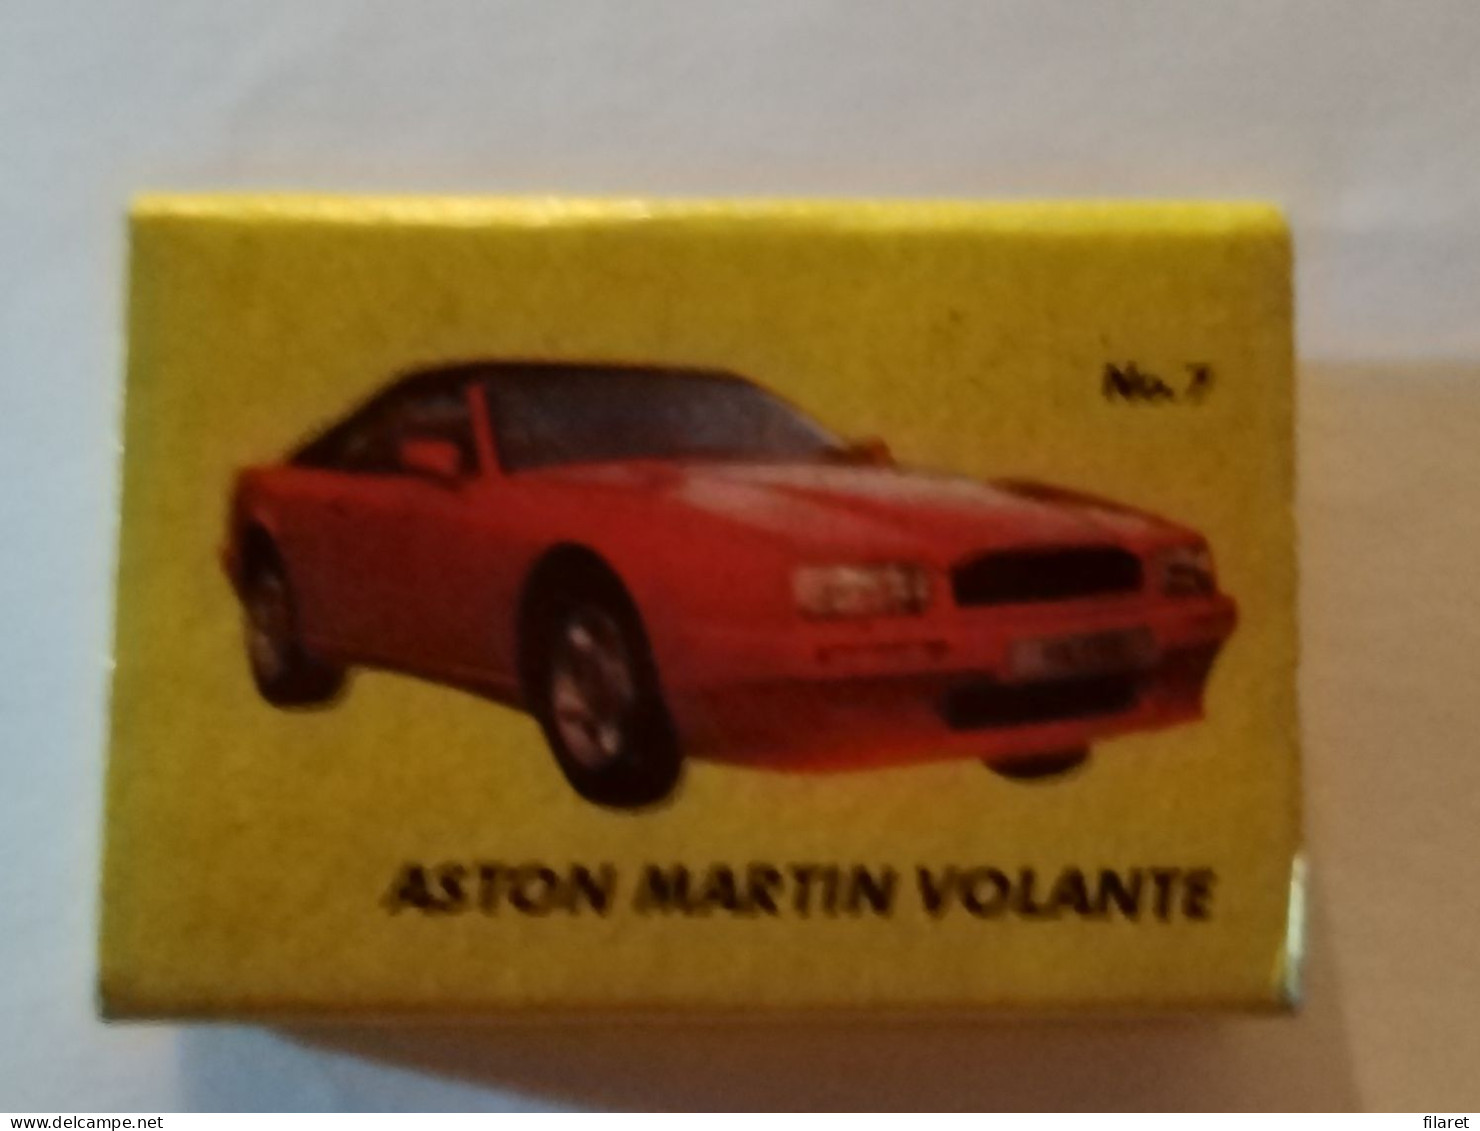 Aston Martin Volante, Car/automobile,MALAZLAR FACTORY,Turcia,matchbox - Luciferdozen